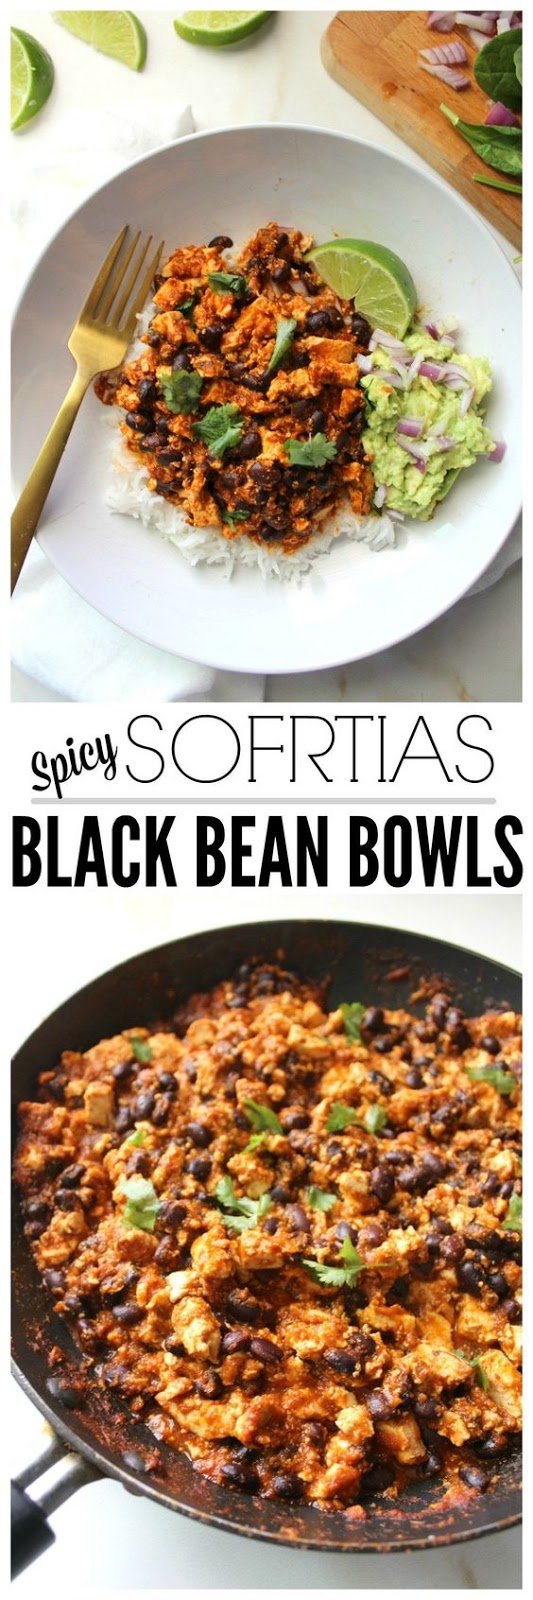 Spicy Sofritas Black Bean Bowls